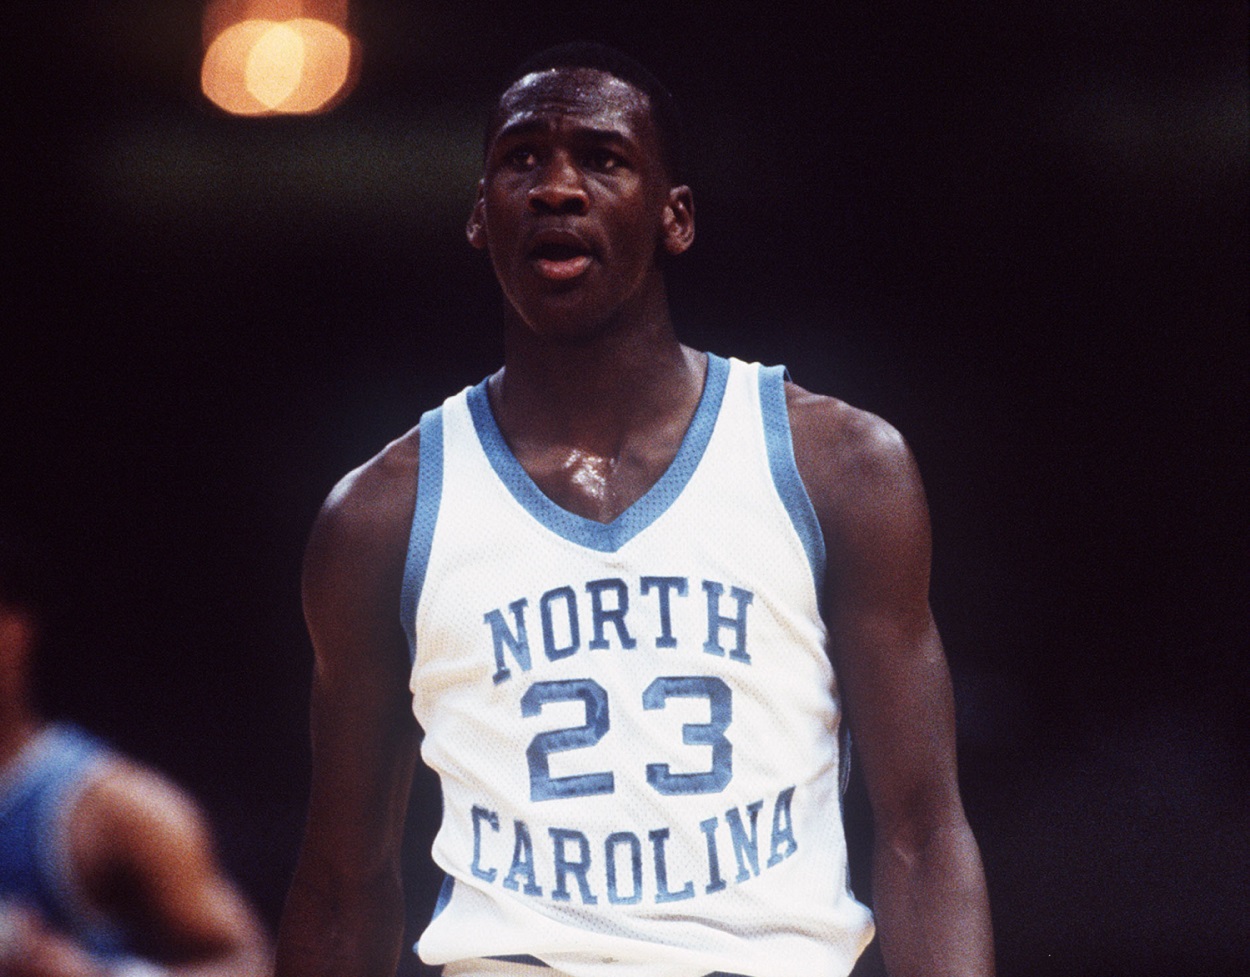 Michael Jordan during the 1982 NCAA Championship Game